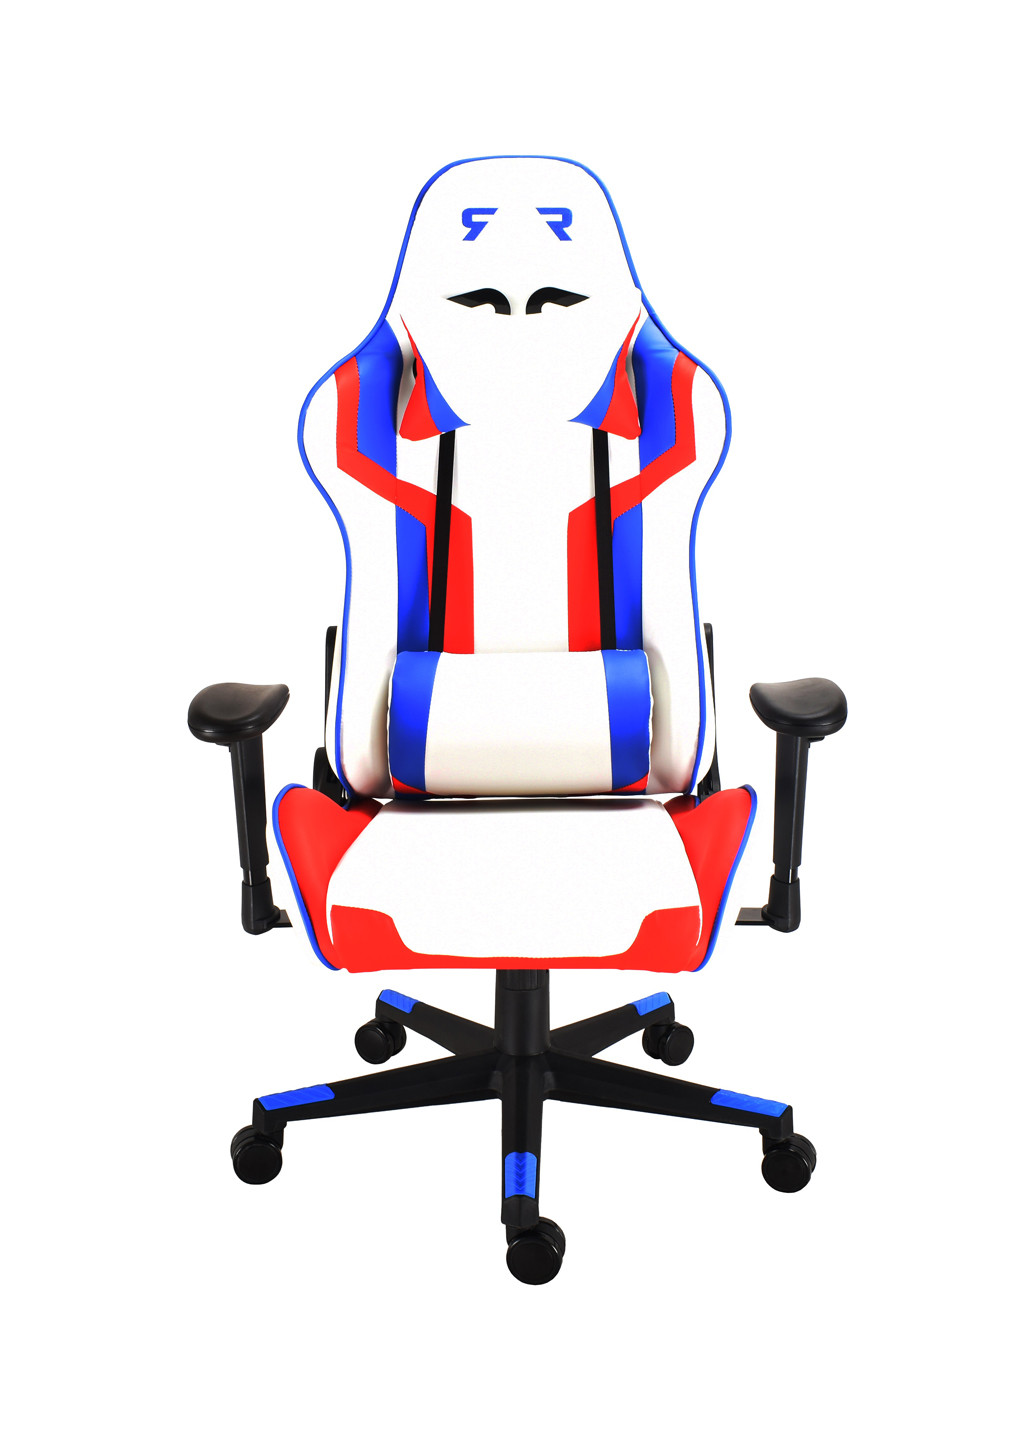 Кресло X-2530 White/Blue/Red GT Racer кресло gt racer x-2530 white/blue/red (143068498)